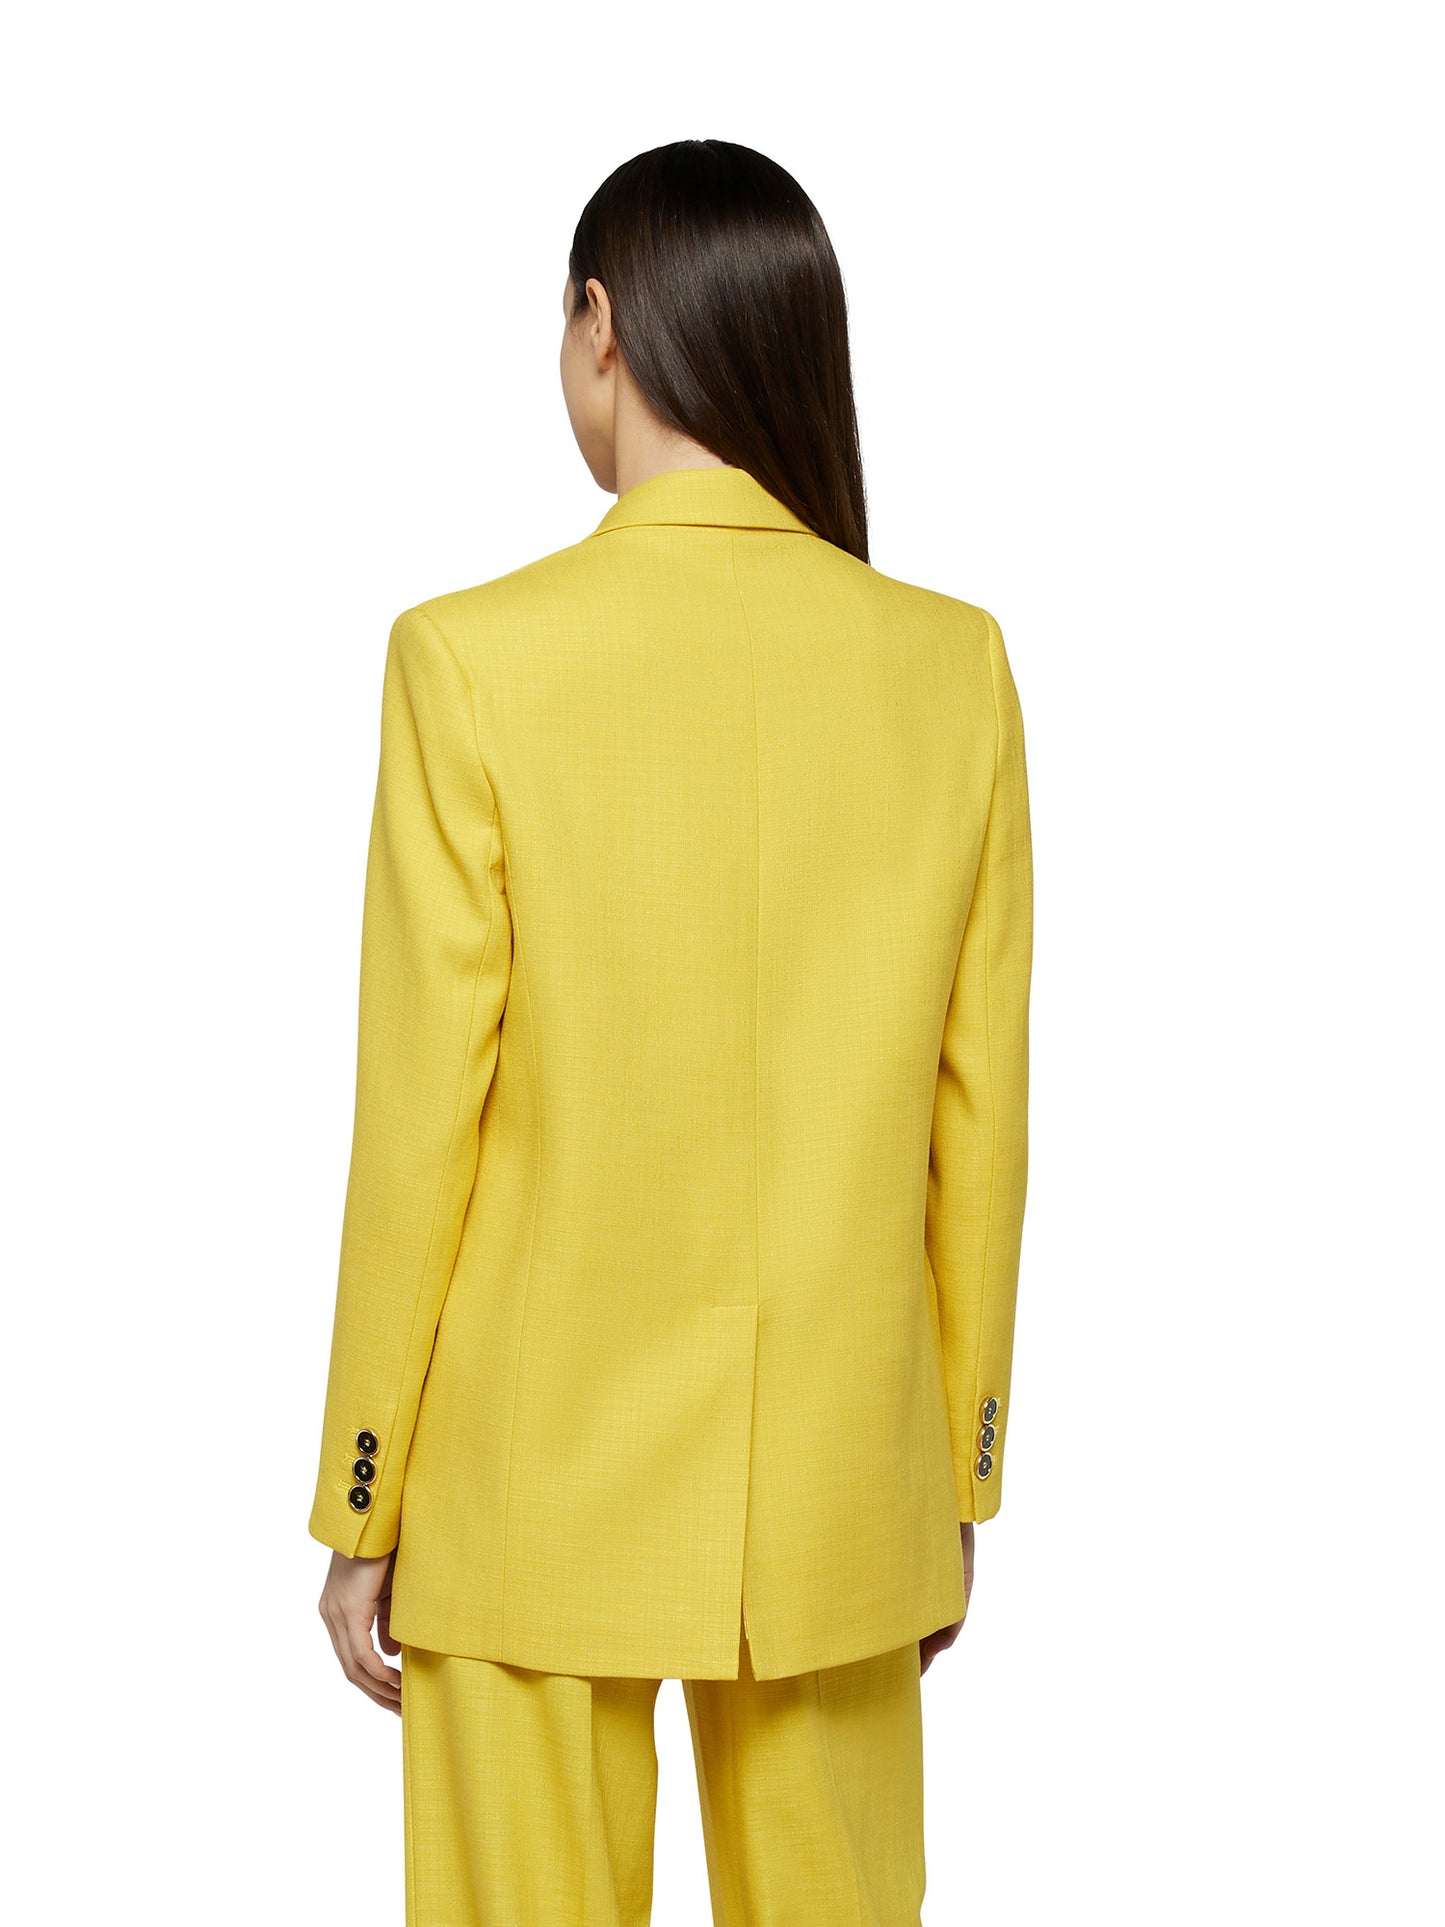 Straight jacket in luxury textured fabric